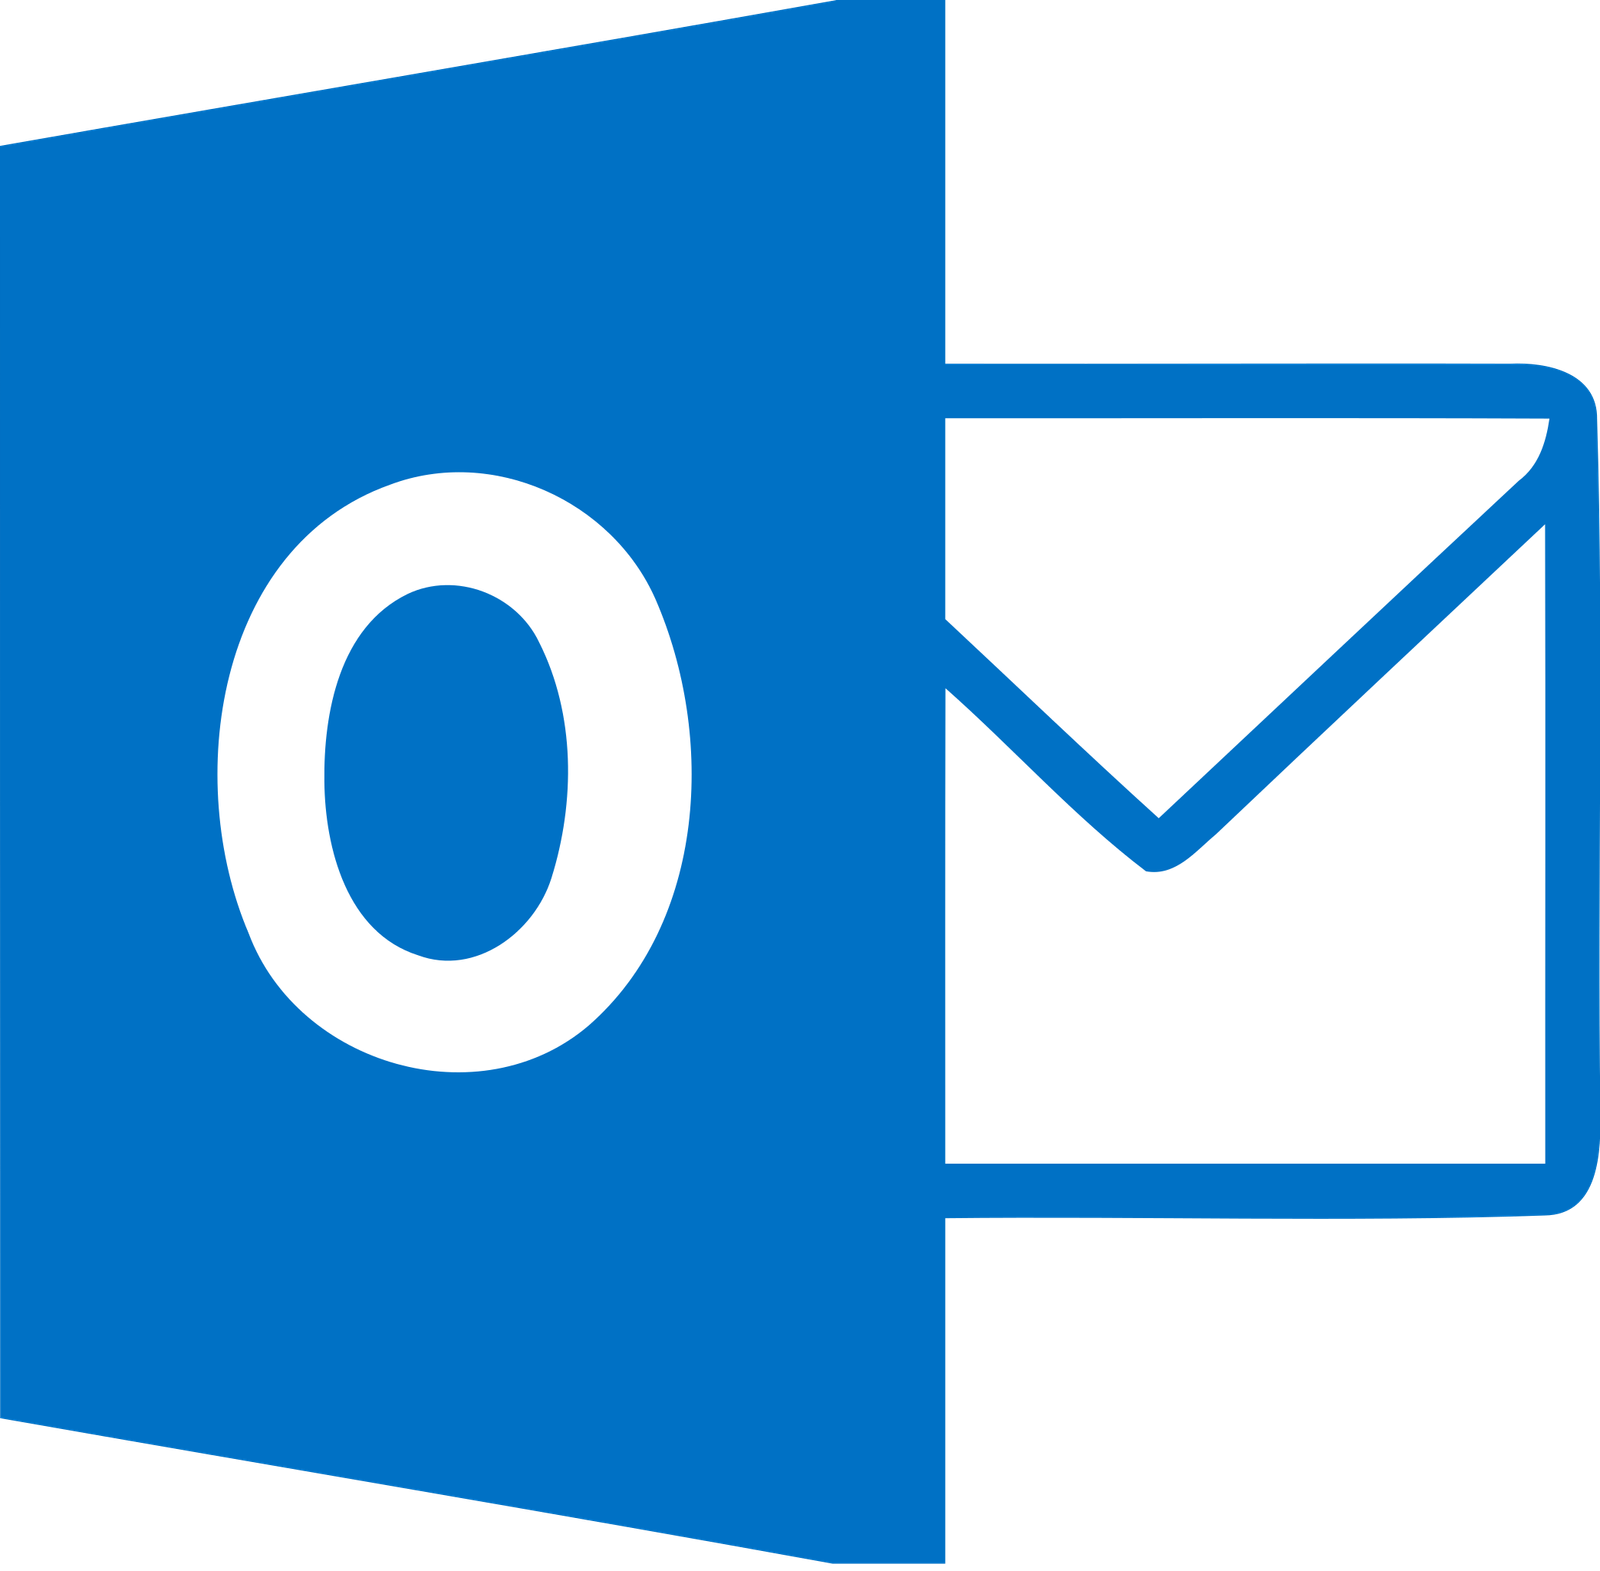 Microsoft_Outlook_2013-2019_logo.svg